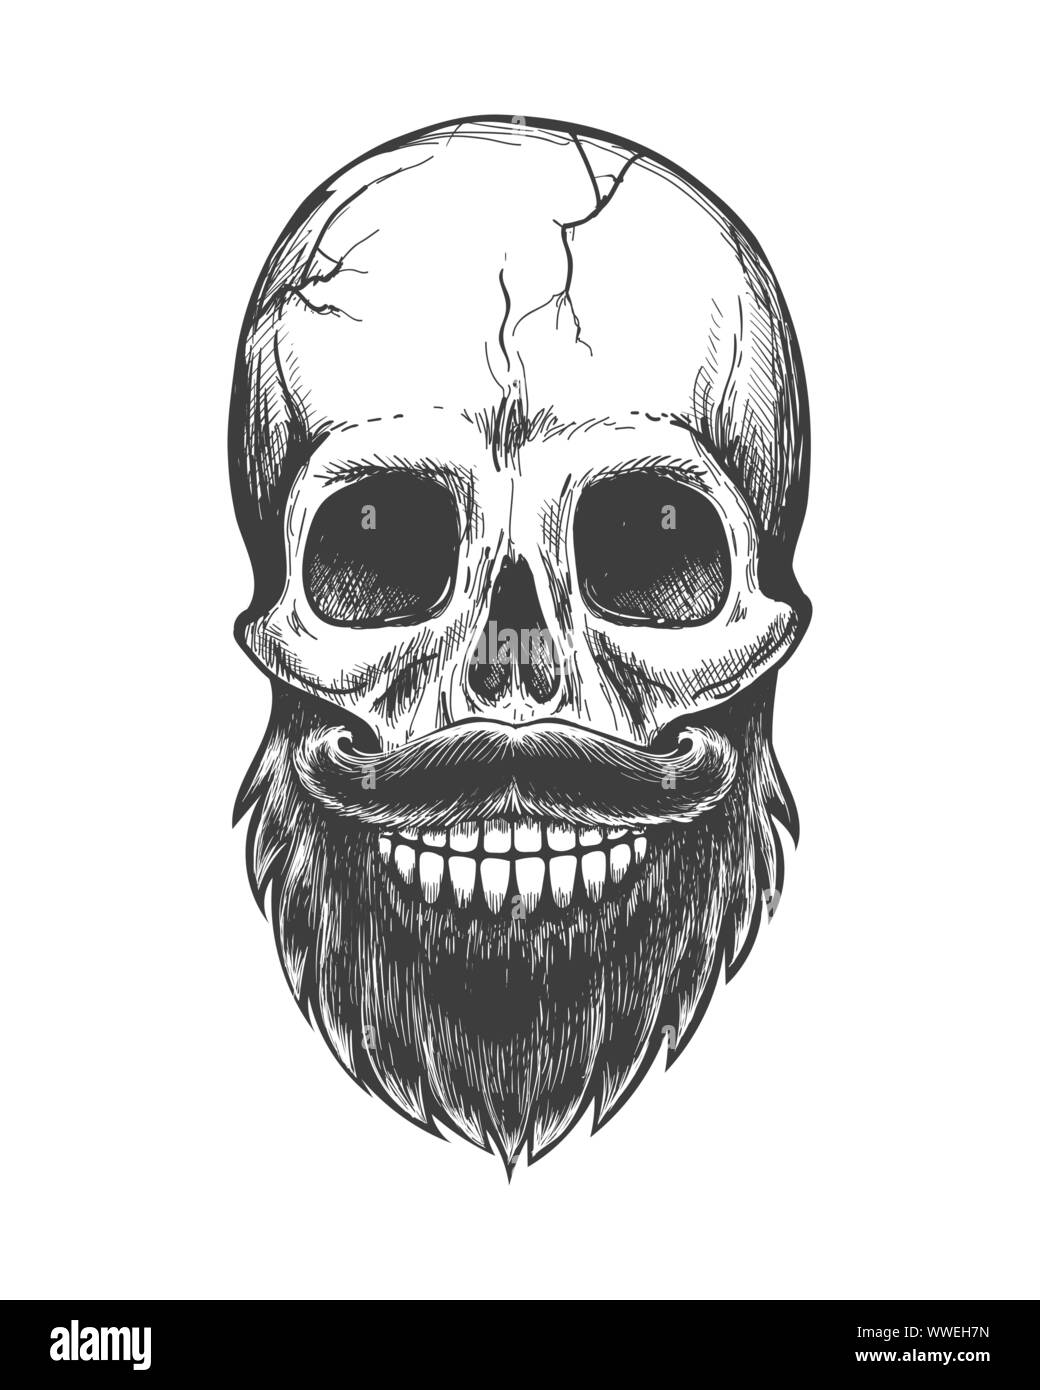 Skull with beard Stock Vector